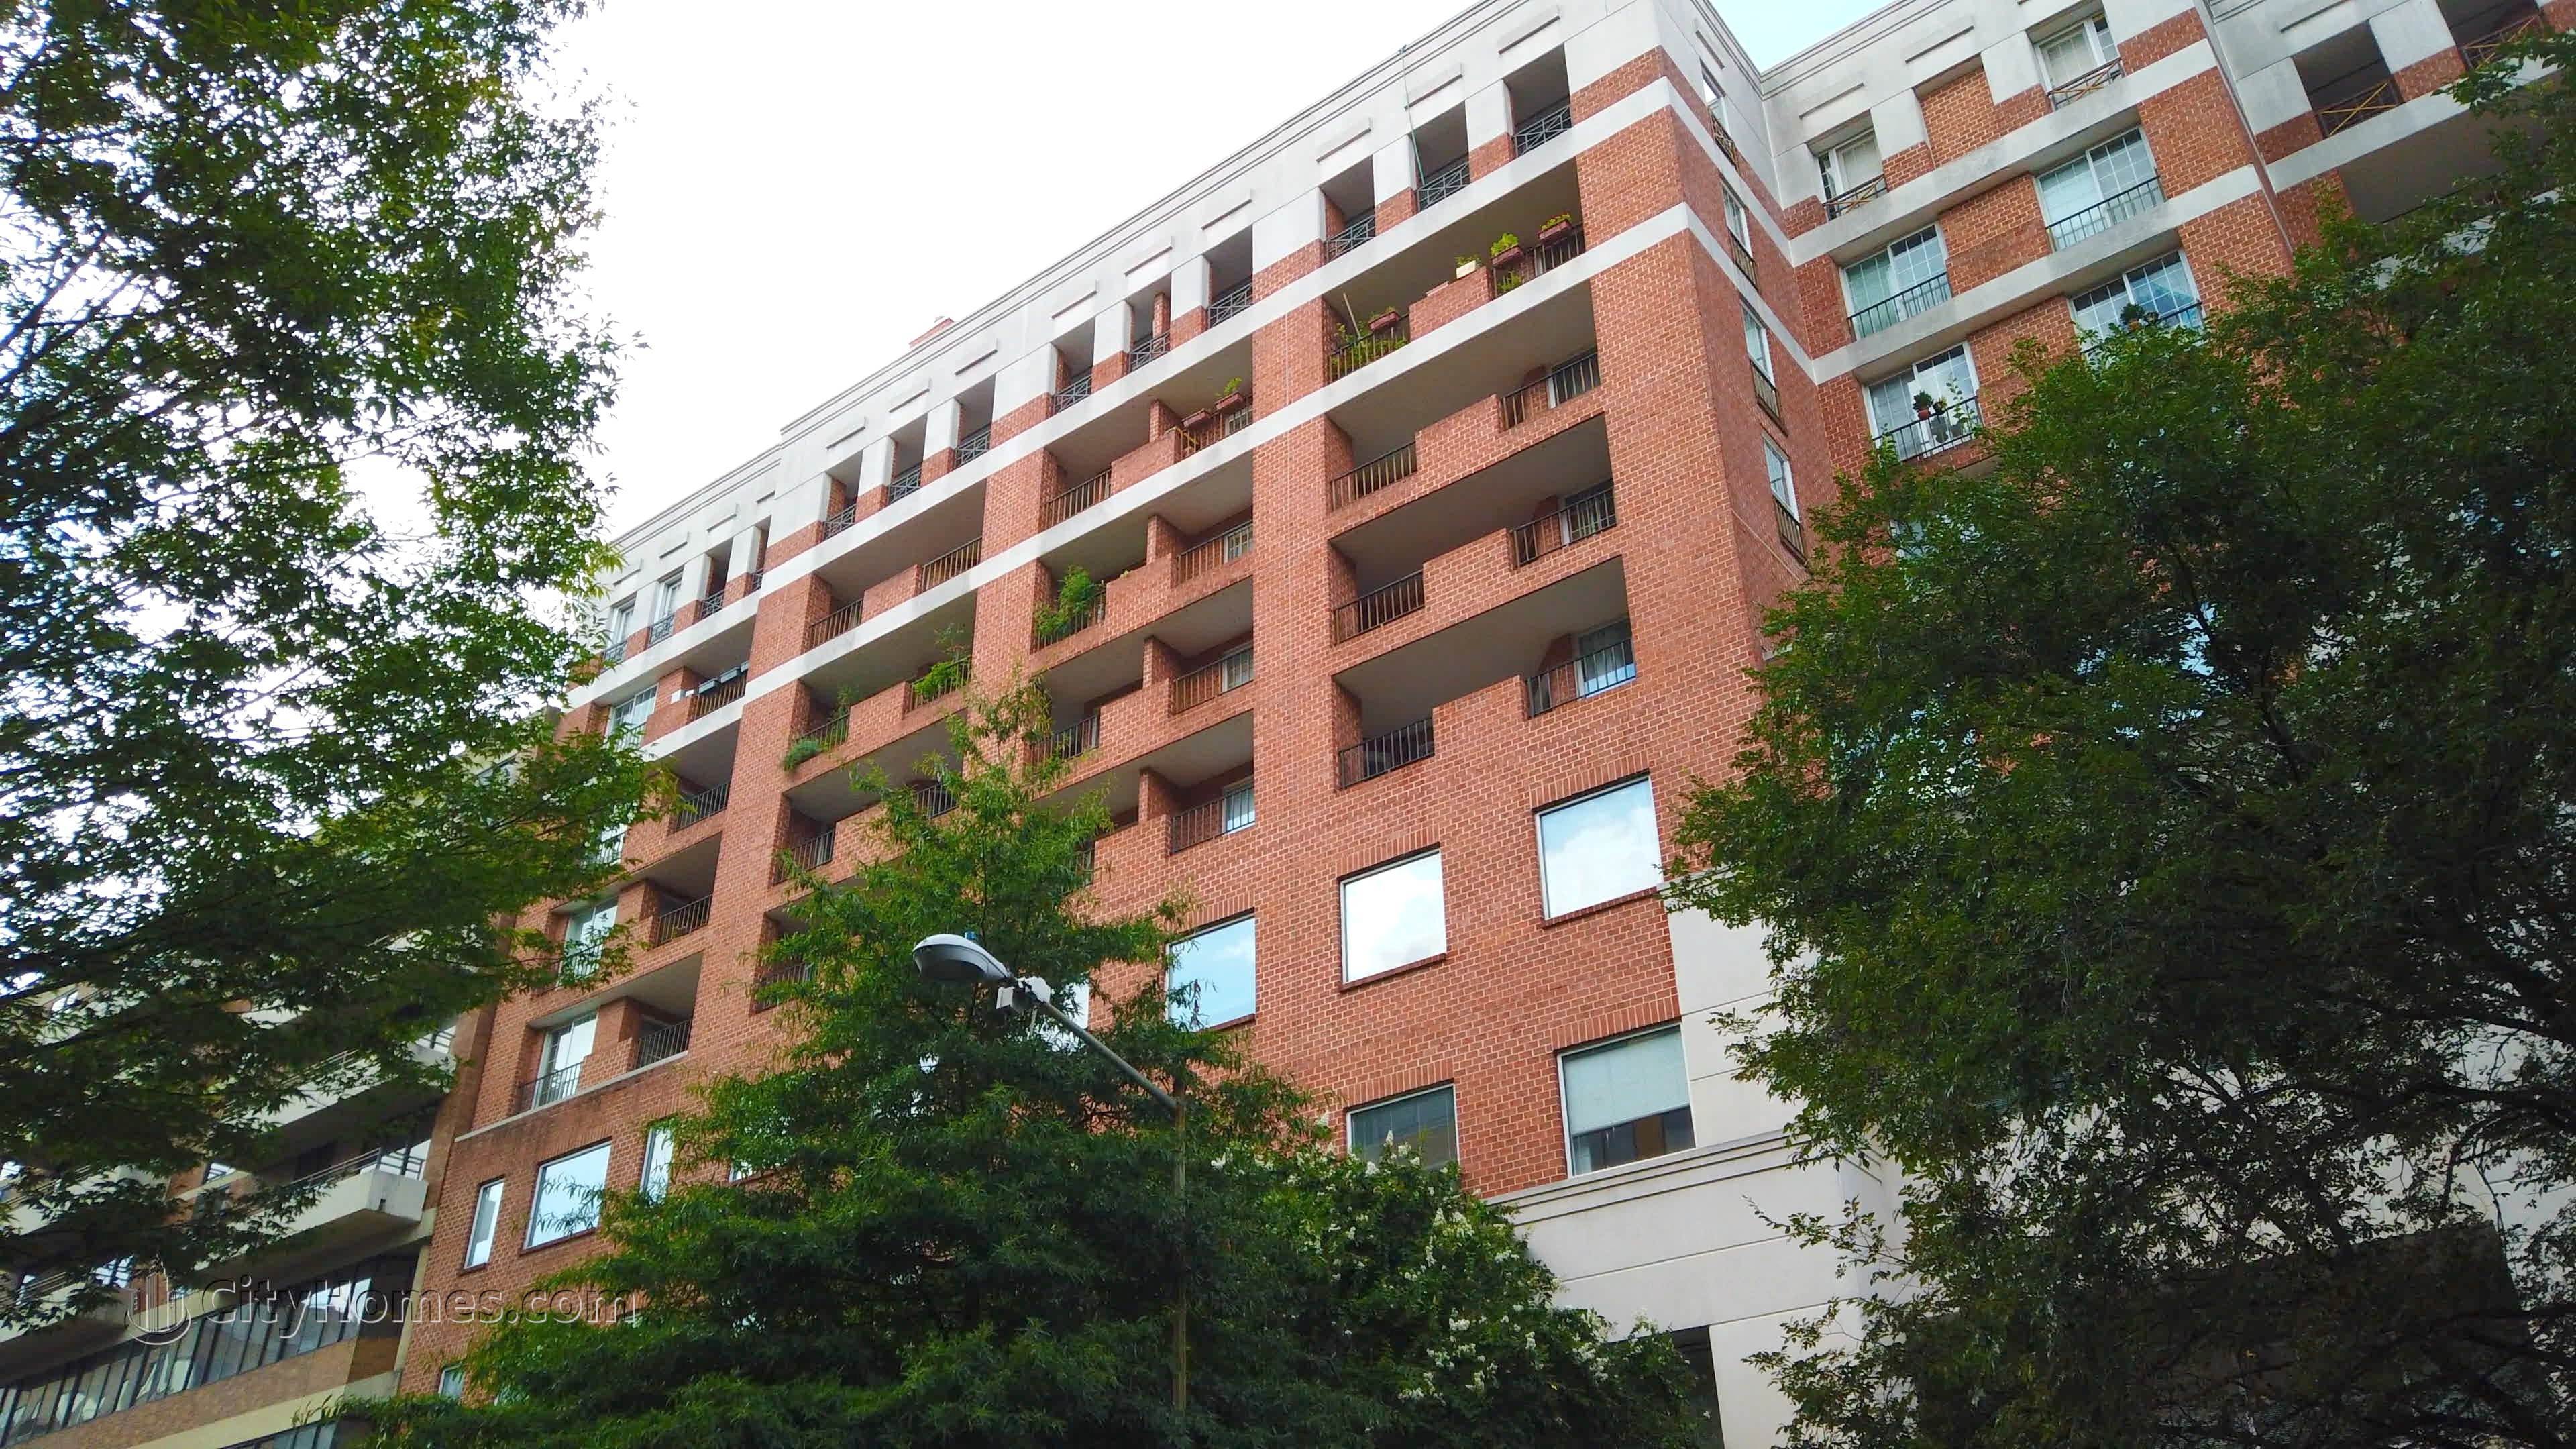 8. Metropolitan Condos building at 1230 23rd St NW, West End, Washington, DC 20037